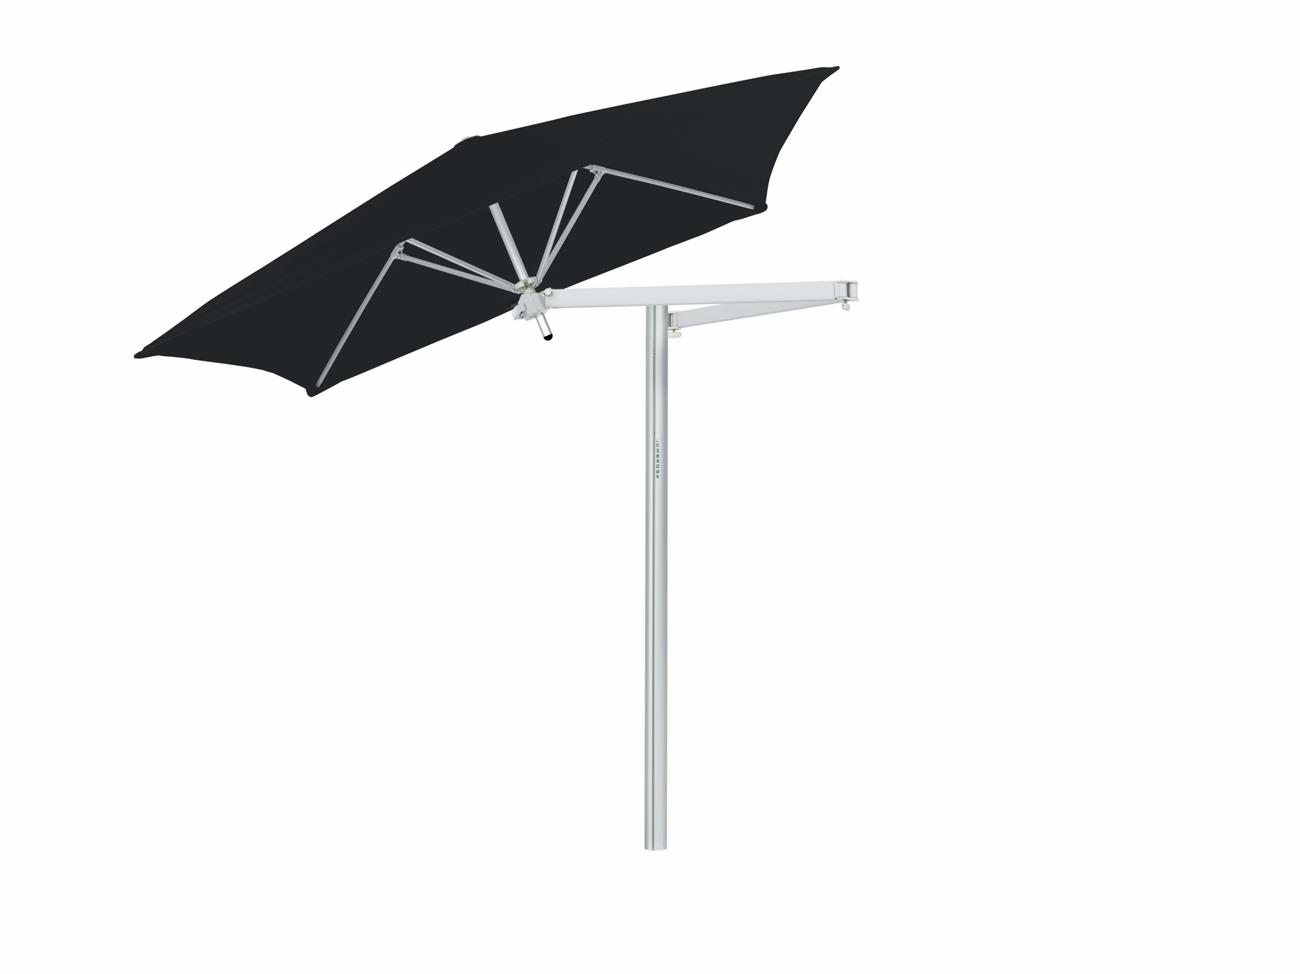 Paraflex cantilever umbrella square 1,9 m with Black fabric and a Neo arm